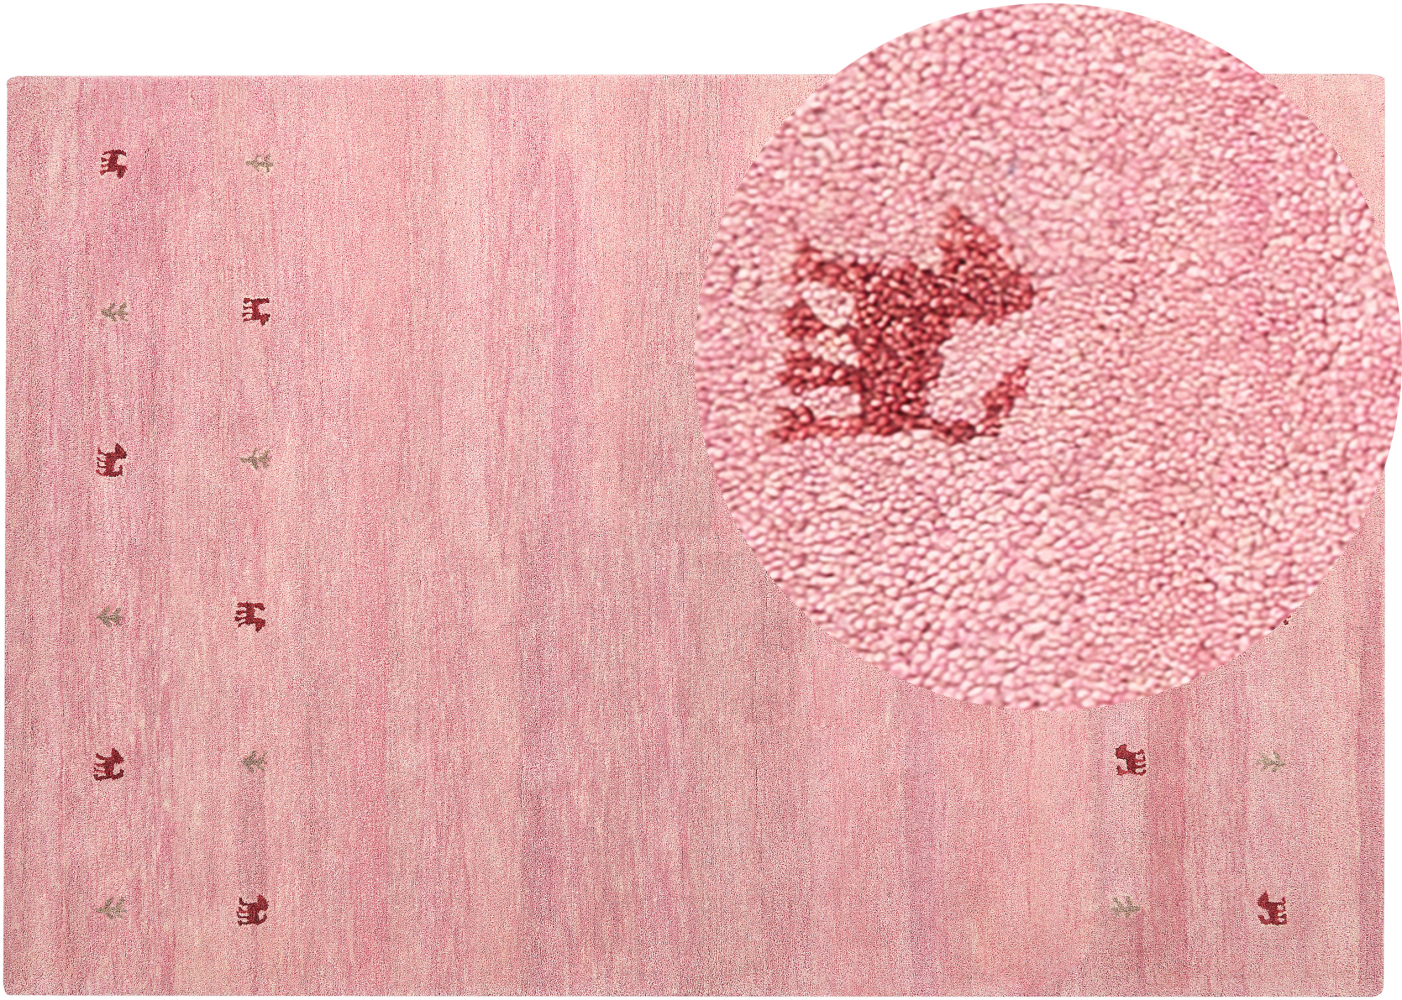 Gabbeh Teppich Wolle rosa 200 x 300 cm Tiermuster Hochflor YULAFI Bild 1